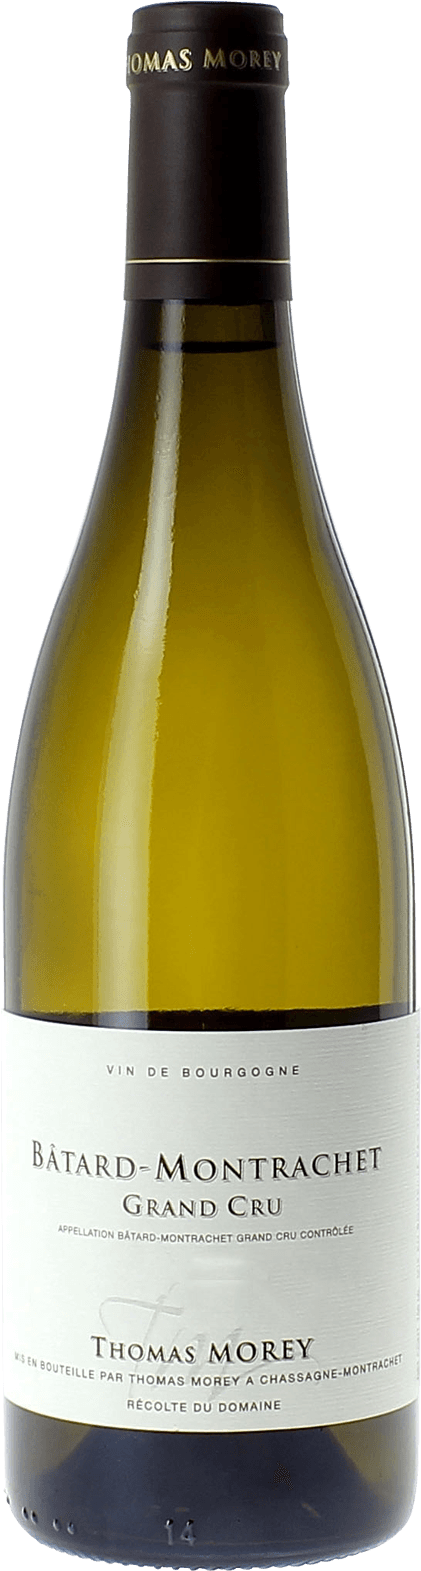 Batard  montrachet grand cru 2018 Domaine MOREY Thomas, Bourgogne blanc